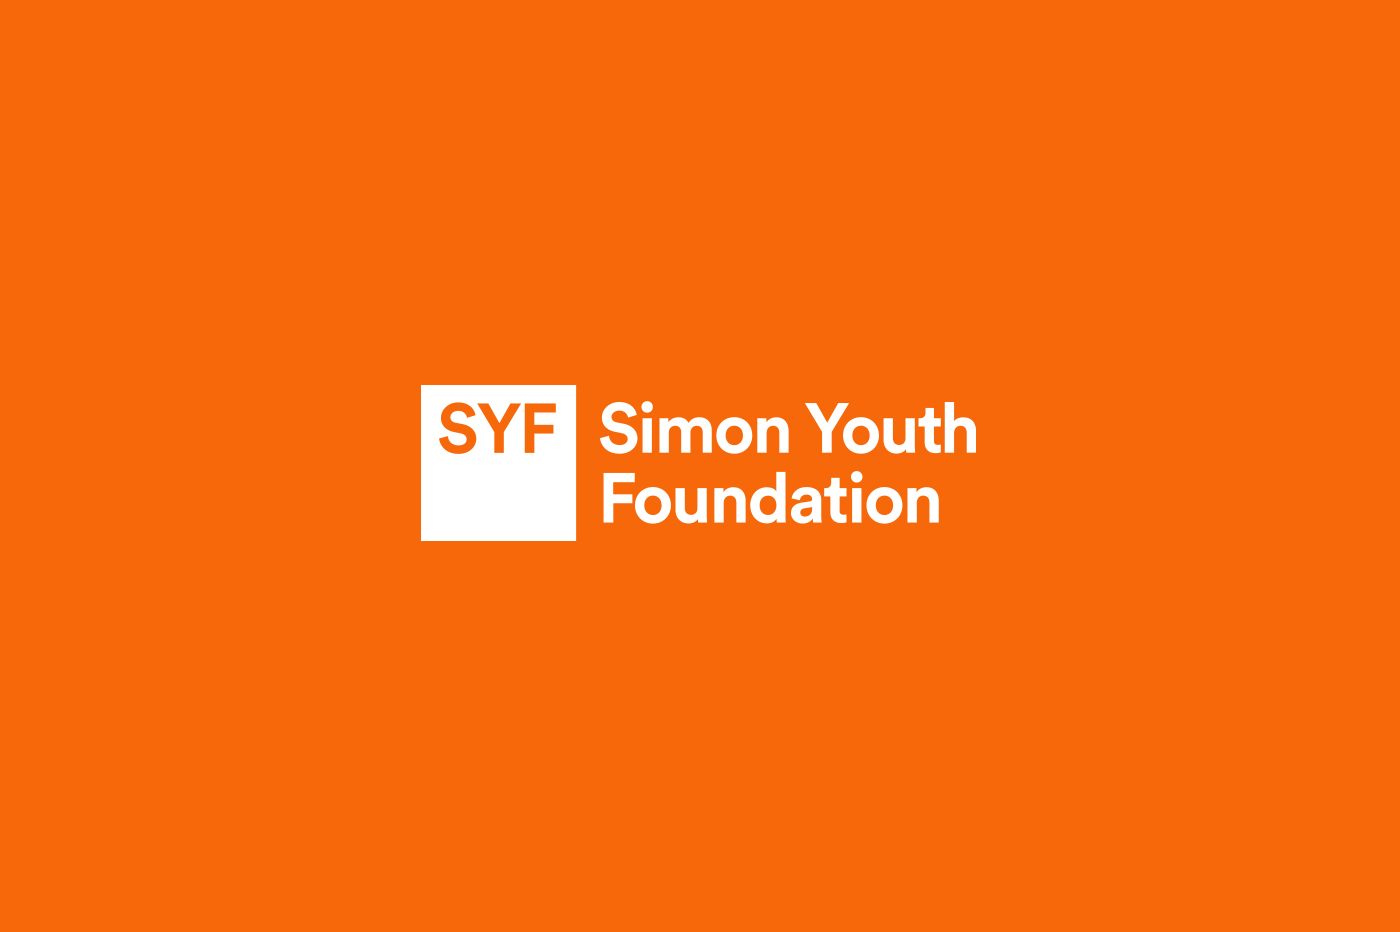 Simon Youth Foundation seeking applicants.